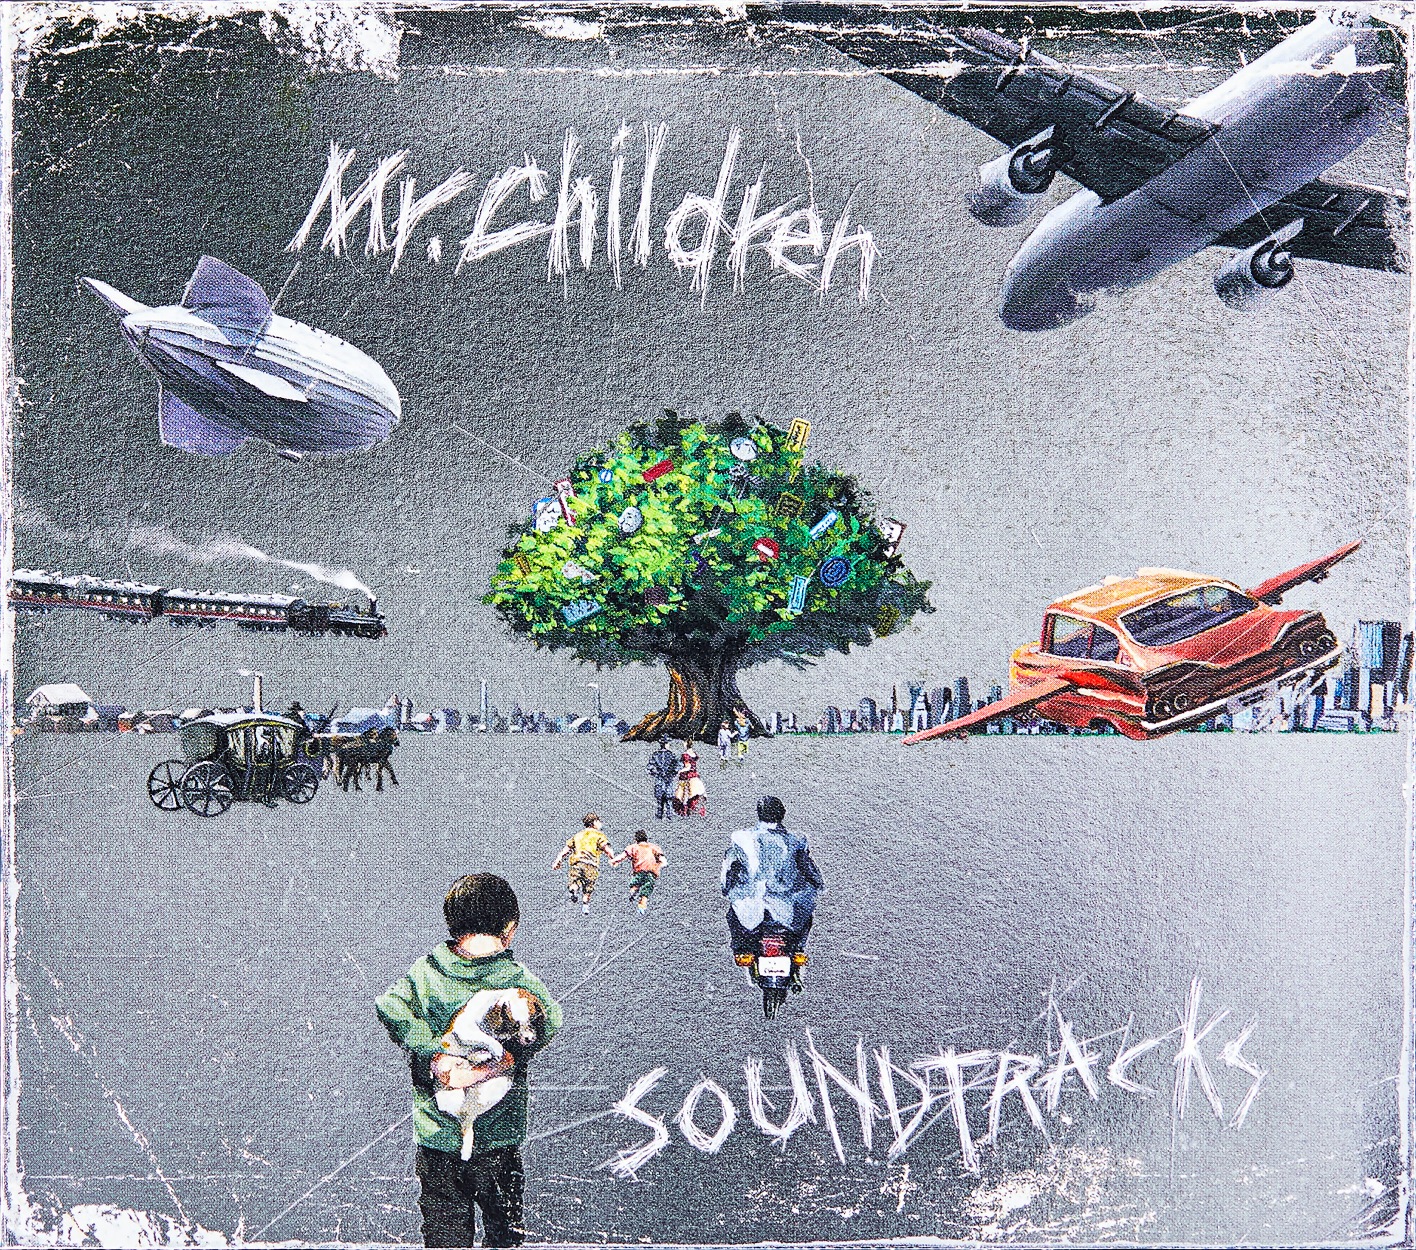 Mr Children Release New Album Soundtracks On Music Streaming Services Moshi Moshi Nippon もしもしにっぽん